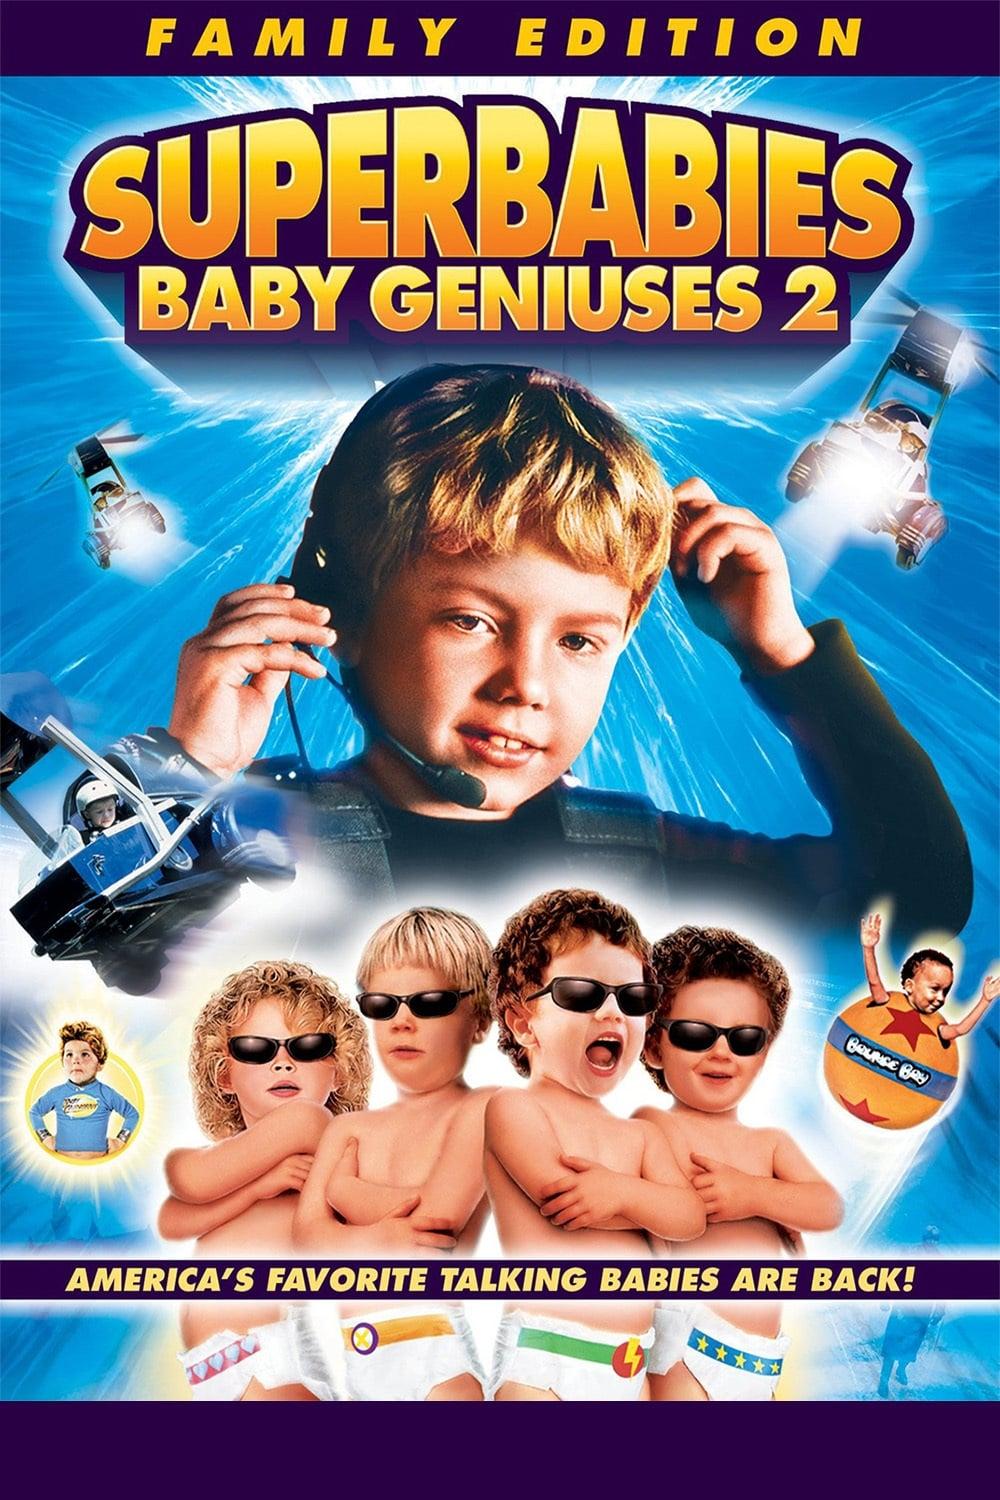 Superbabies: Baby Geniuses 2 poster